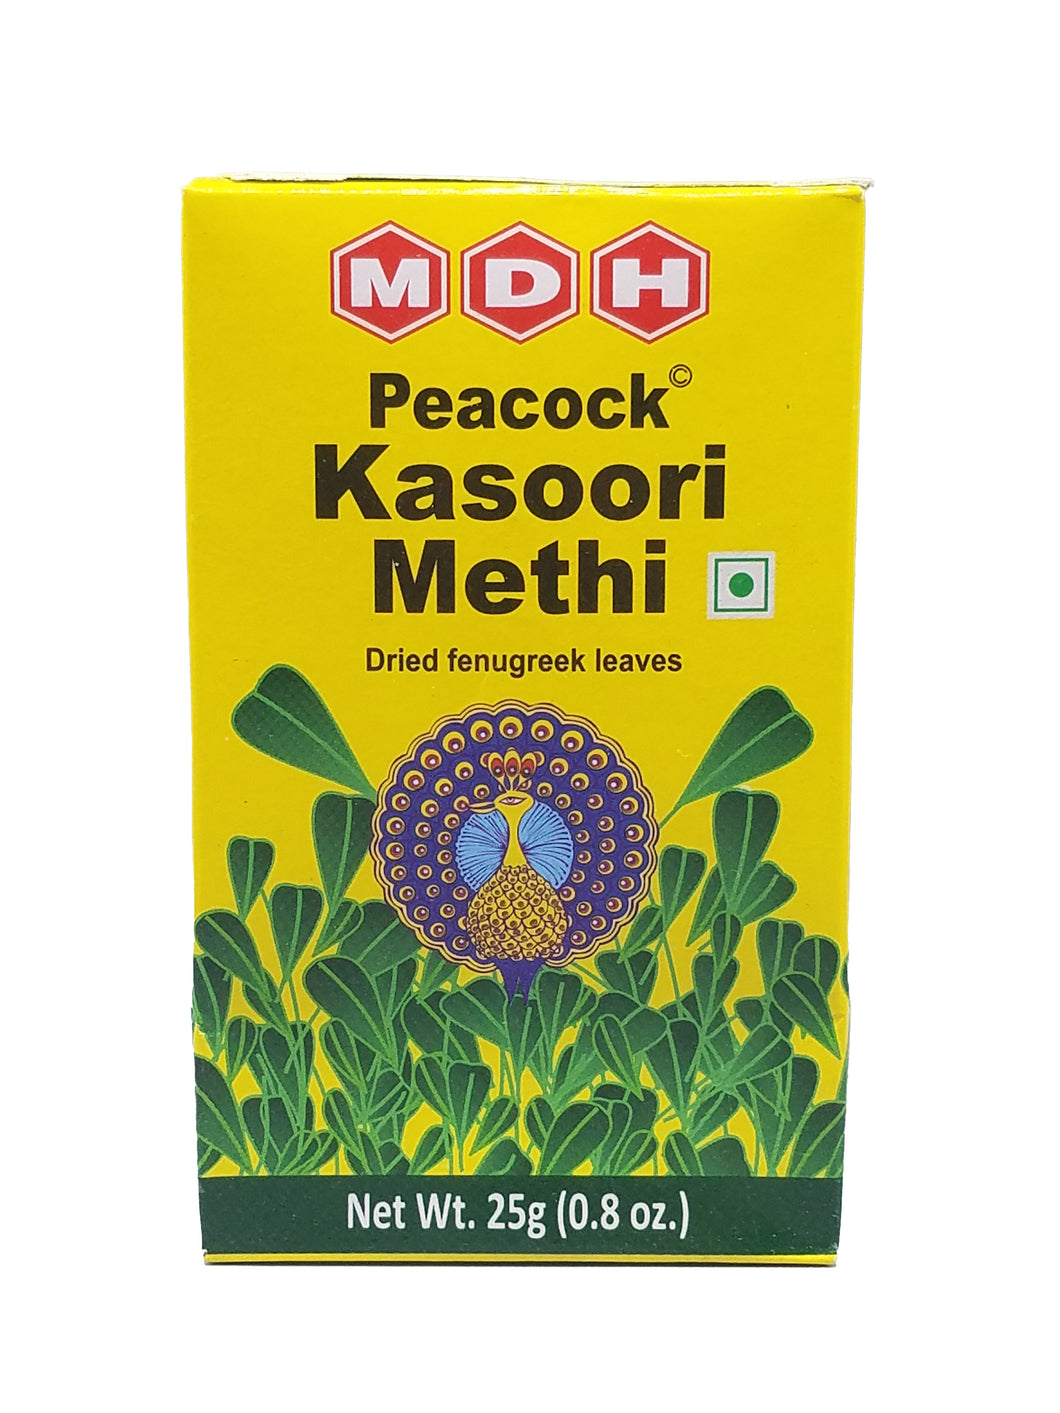 MDH Peacock Kasoori Methi